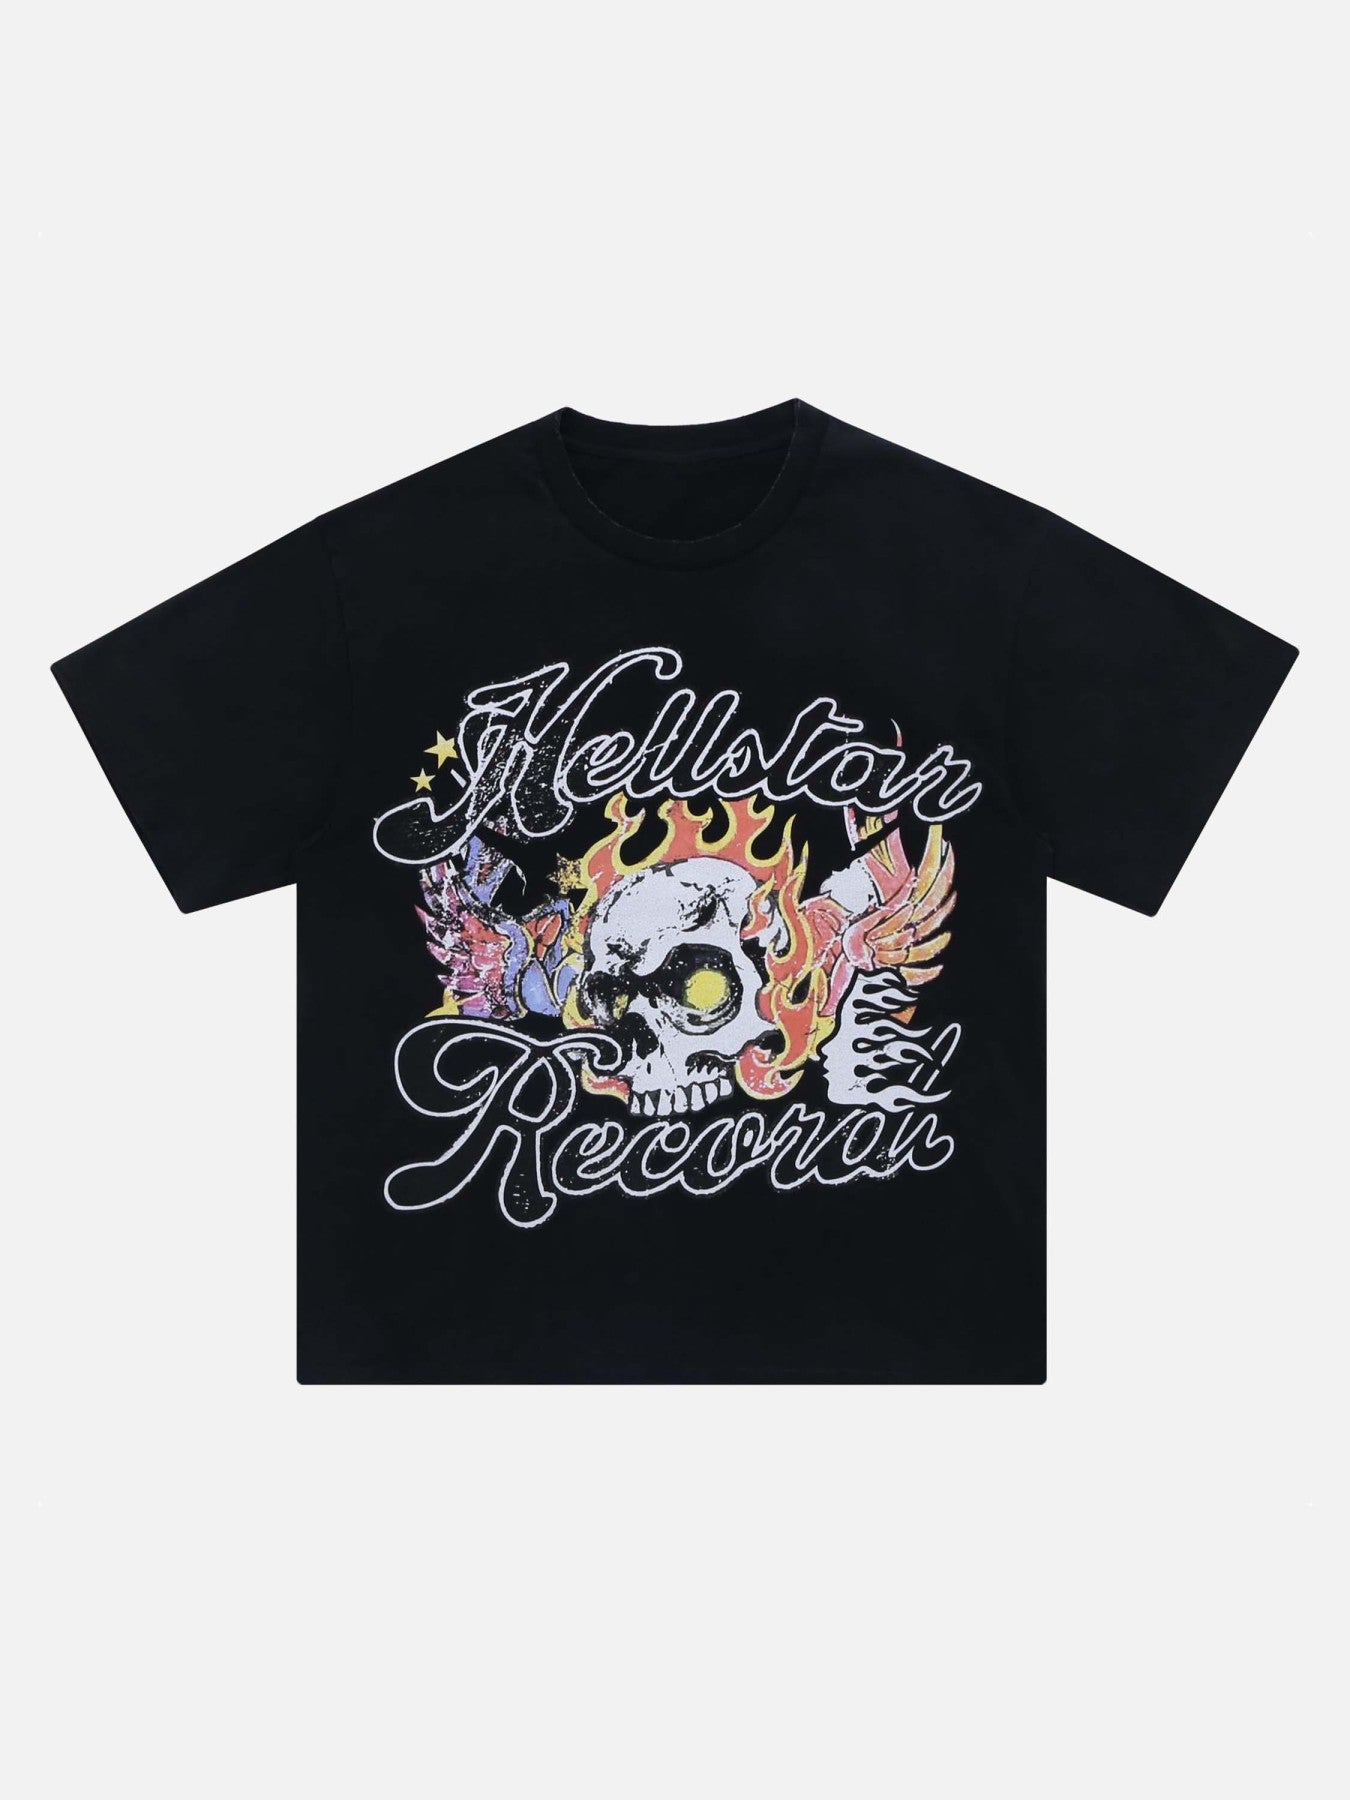 Thesupermade Demon Skull Print T-Shirt